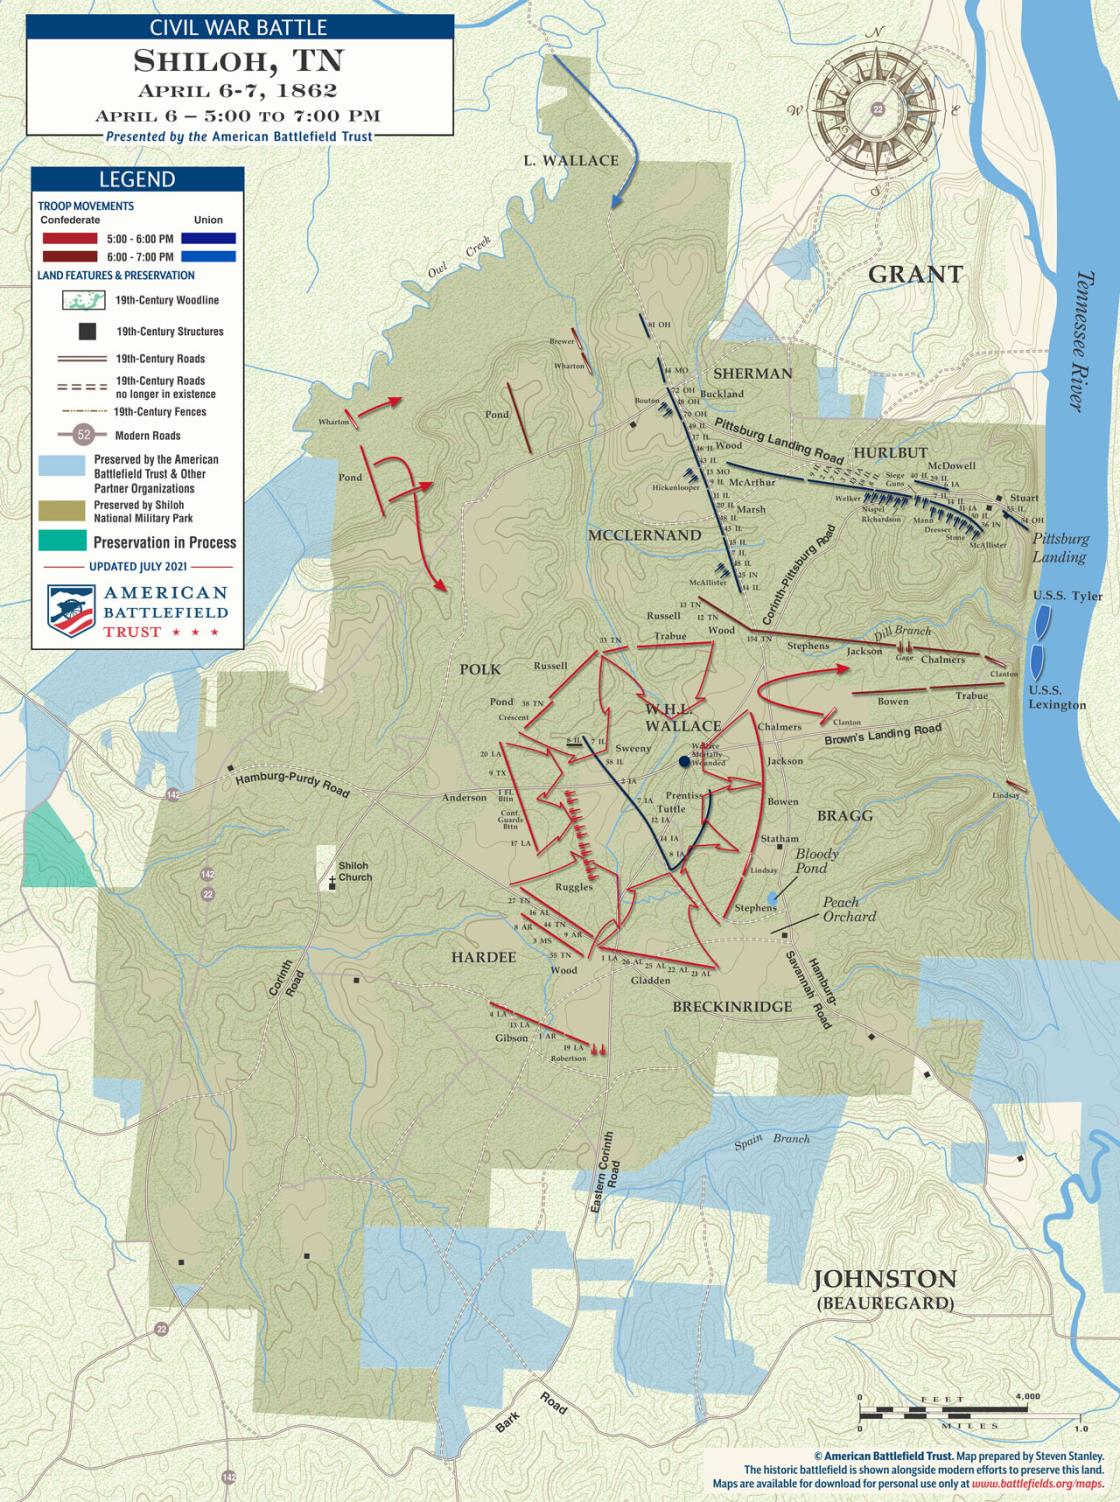 Shiloh - April 6, 1862 - 5pm to 7pm Battle Map